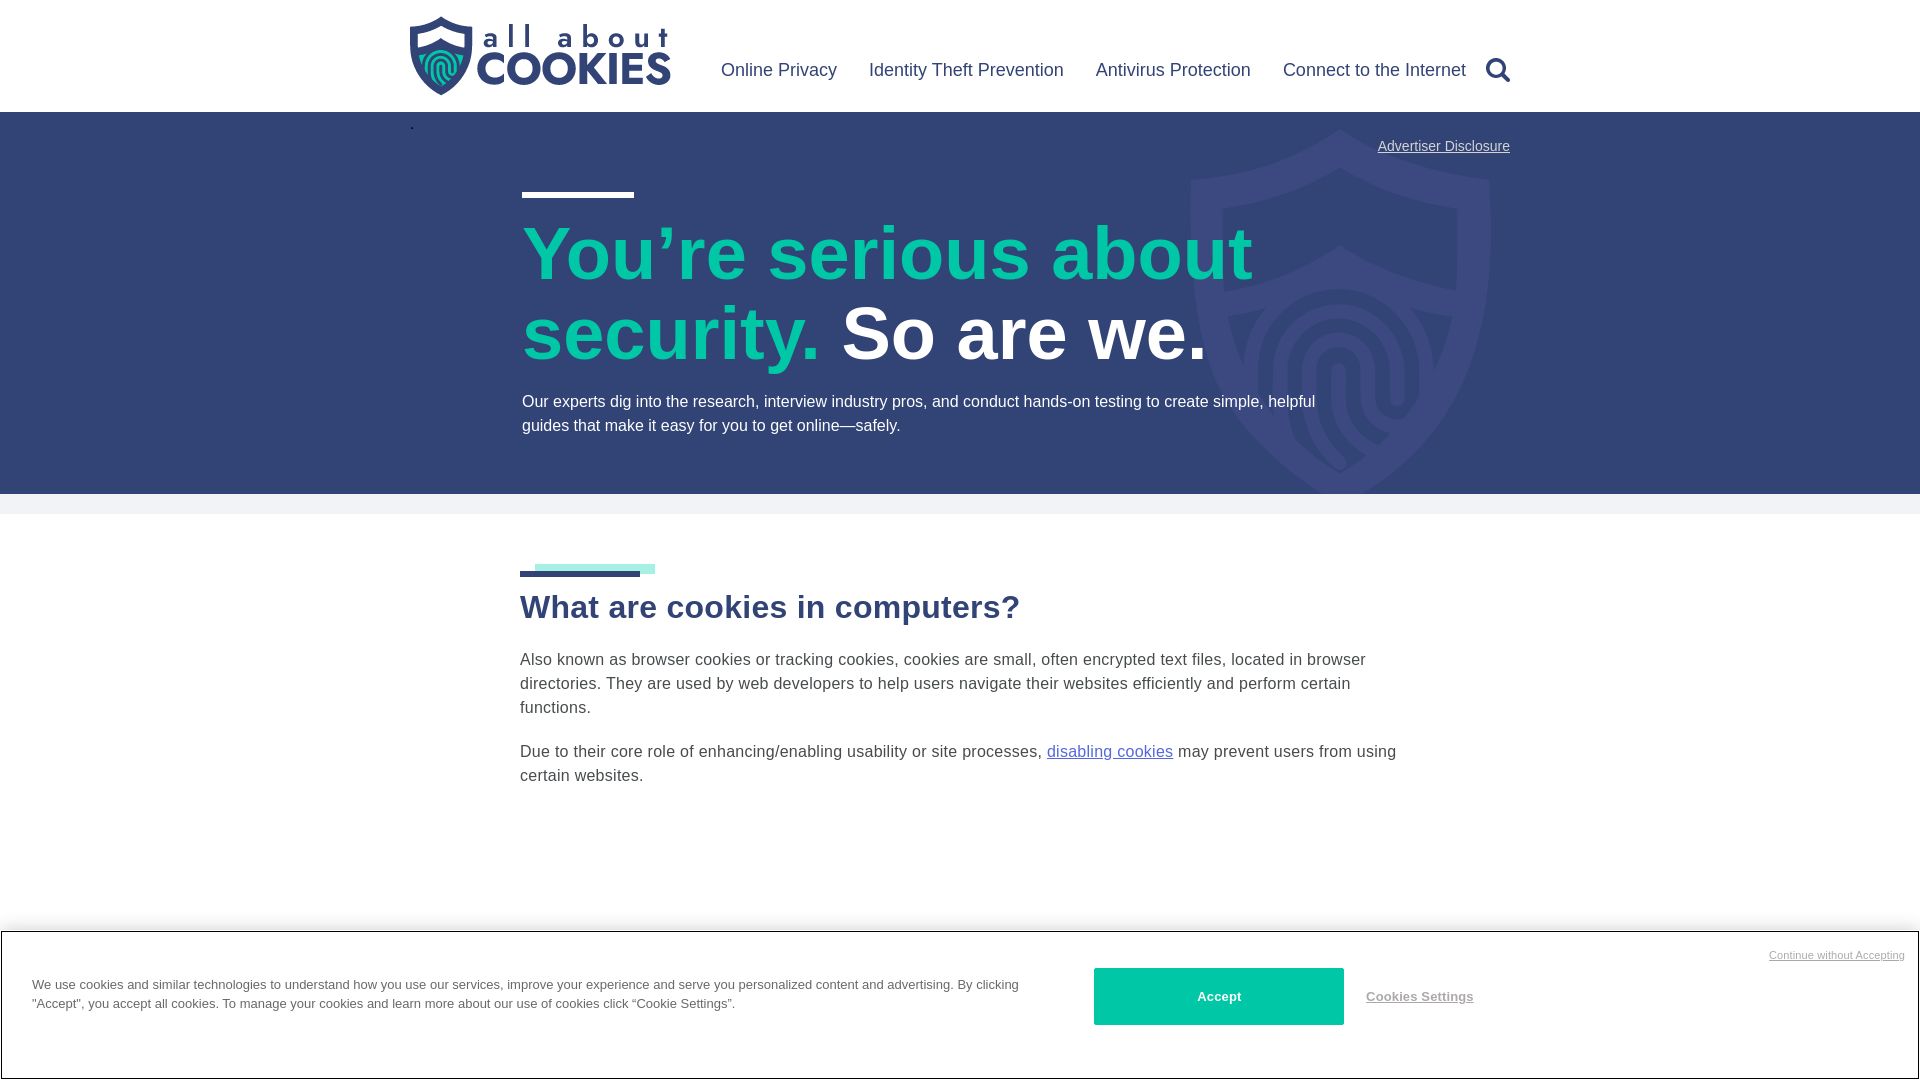 Website status allaboutcookies.org is   ONLINE